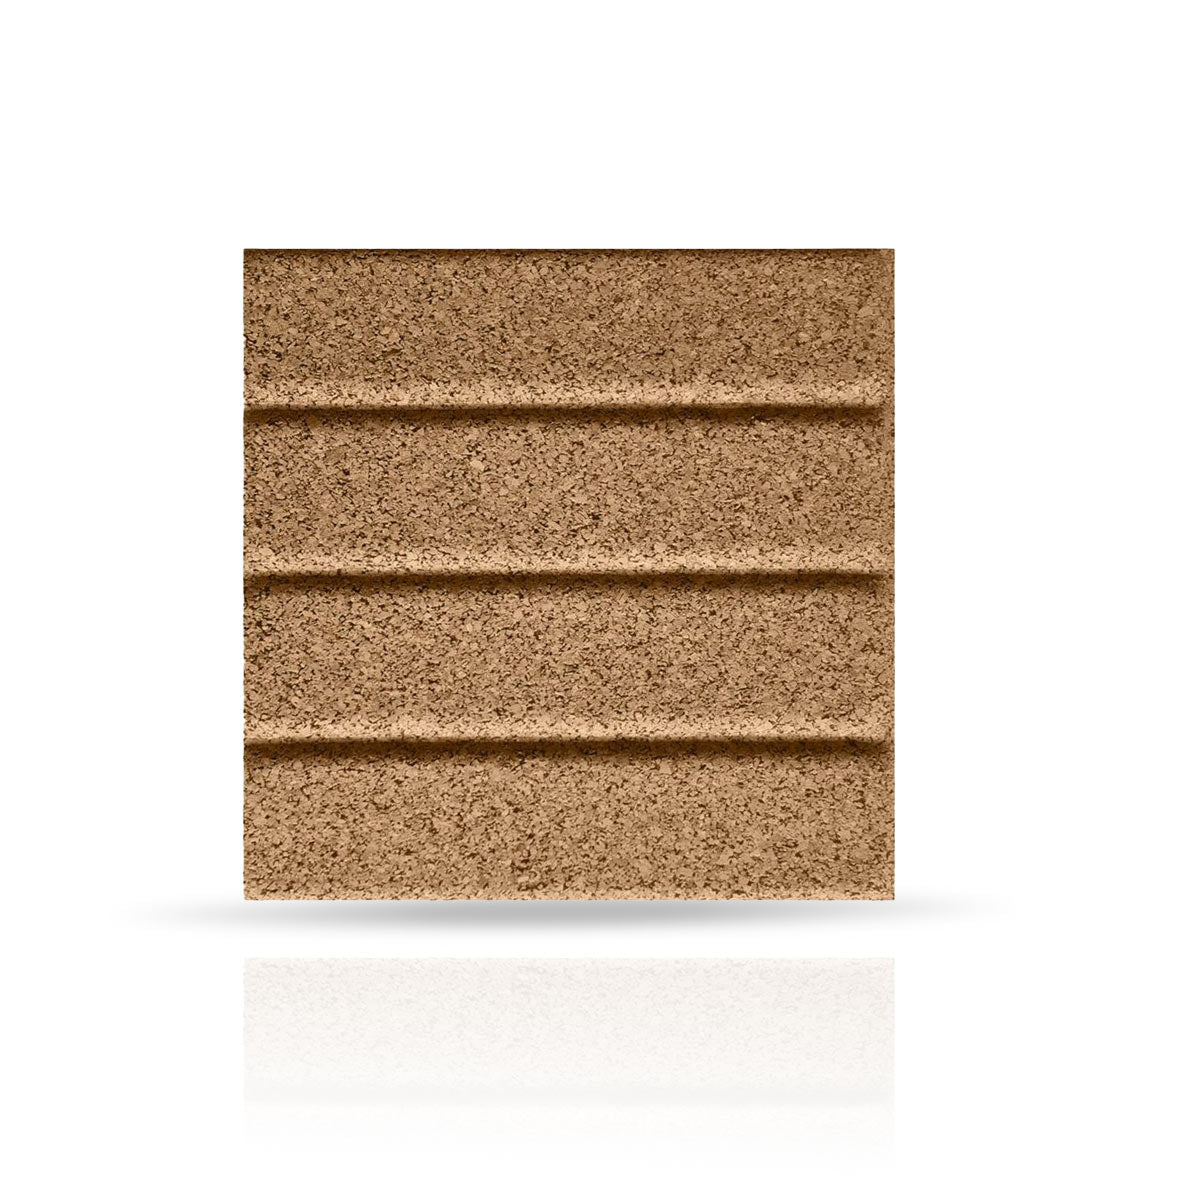 STRIPES Cork Acoustic Panels box of 4 - Cork Panels | DecorMania